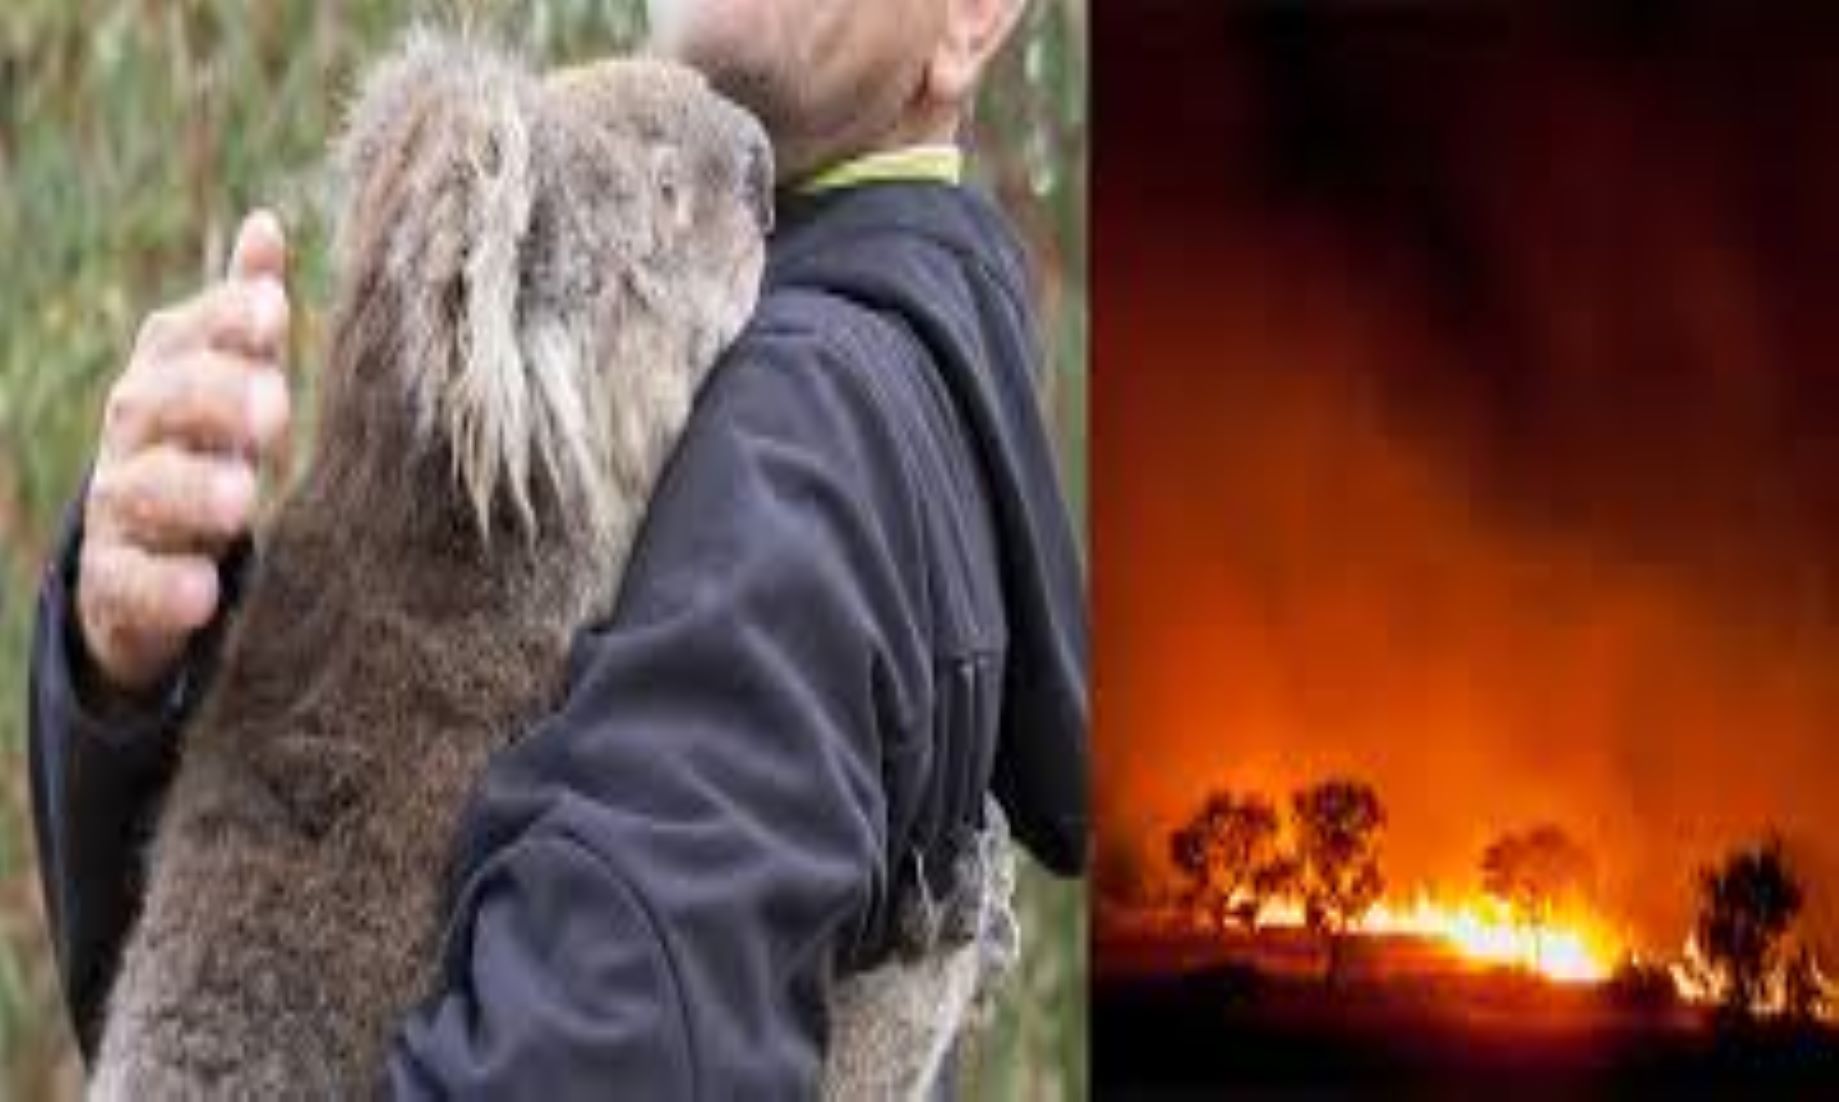 Bushfire In Australian National Park An Environmental Tragedy: Expert